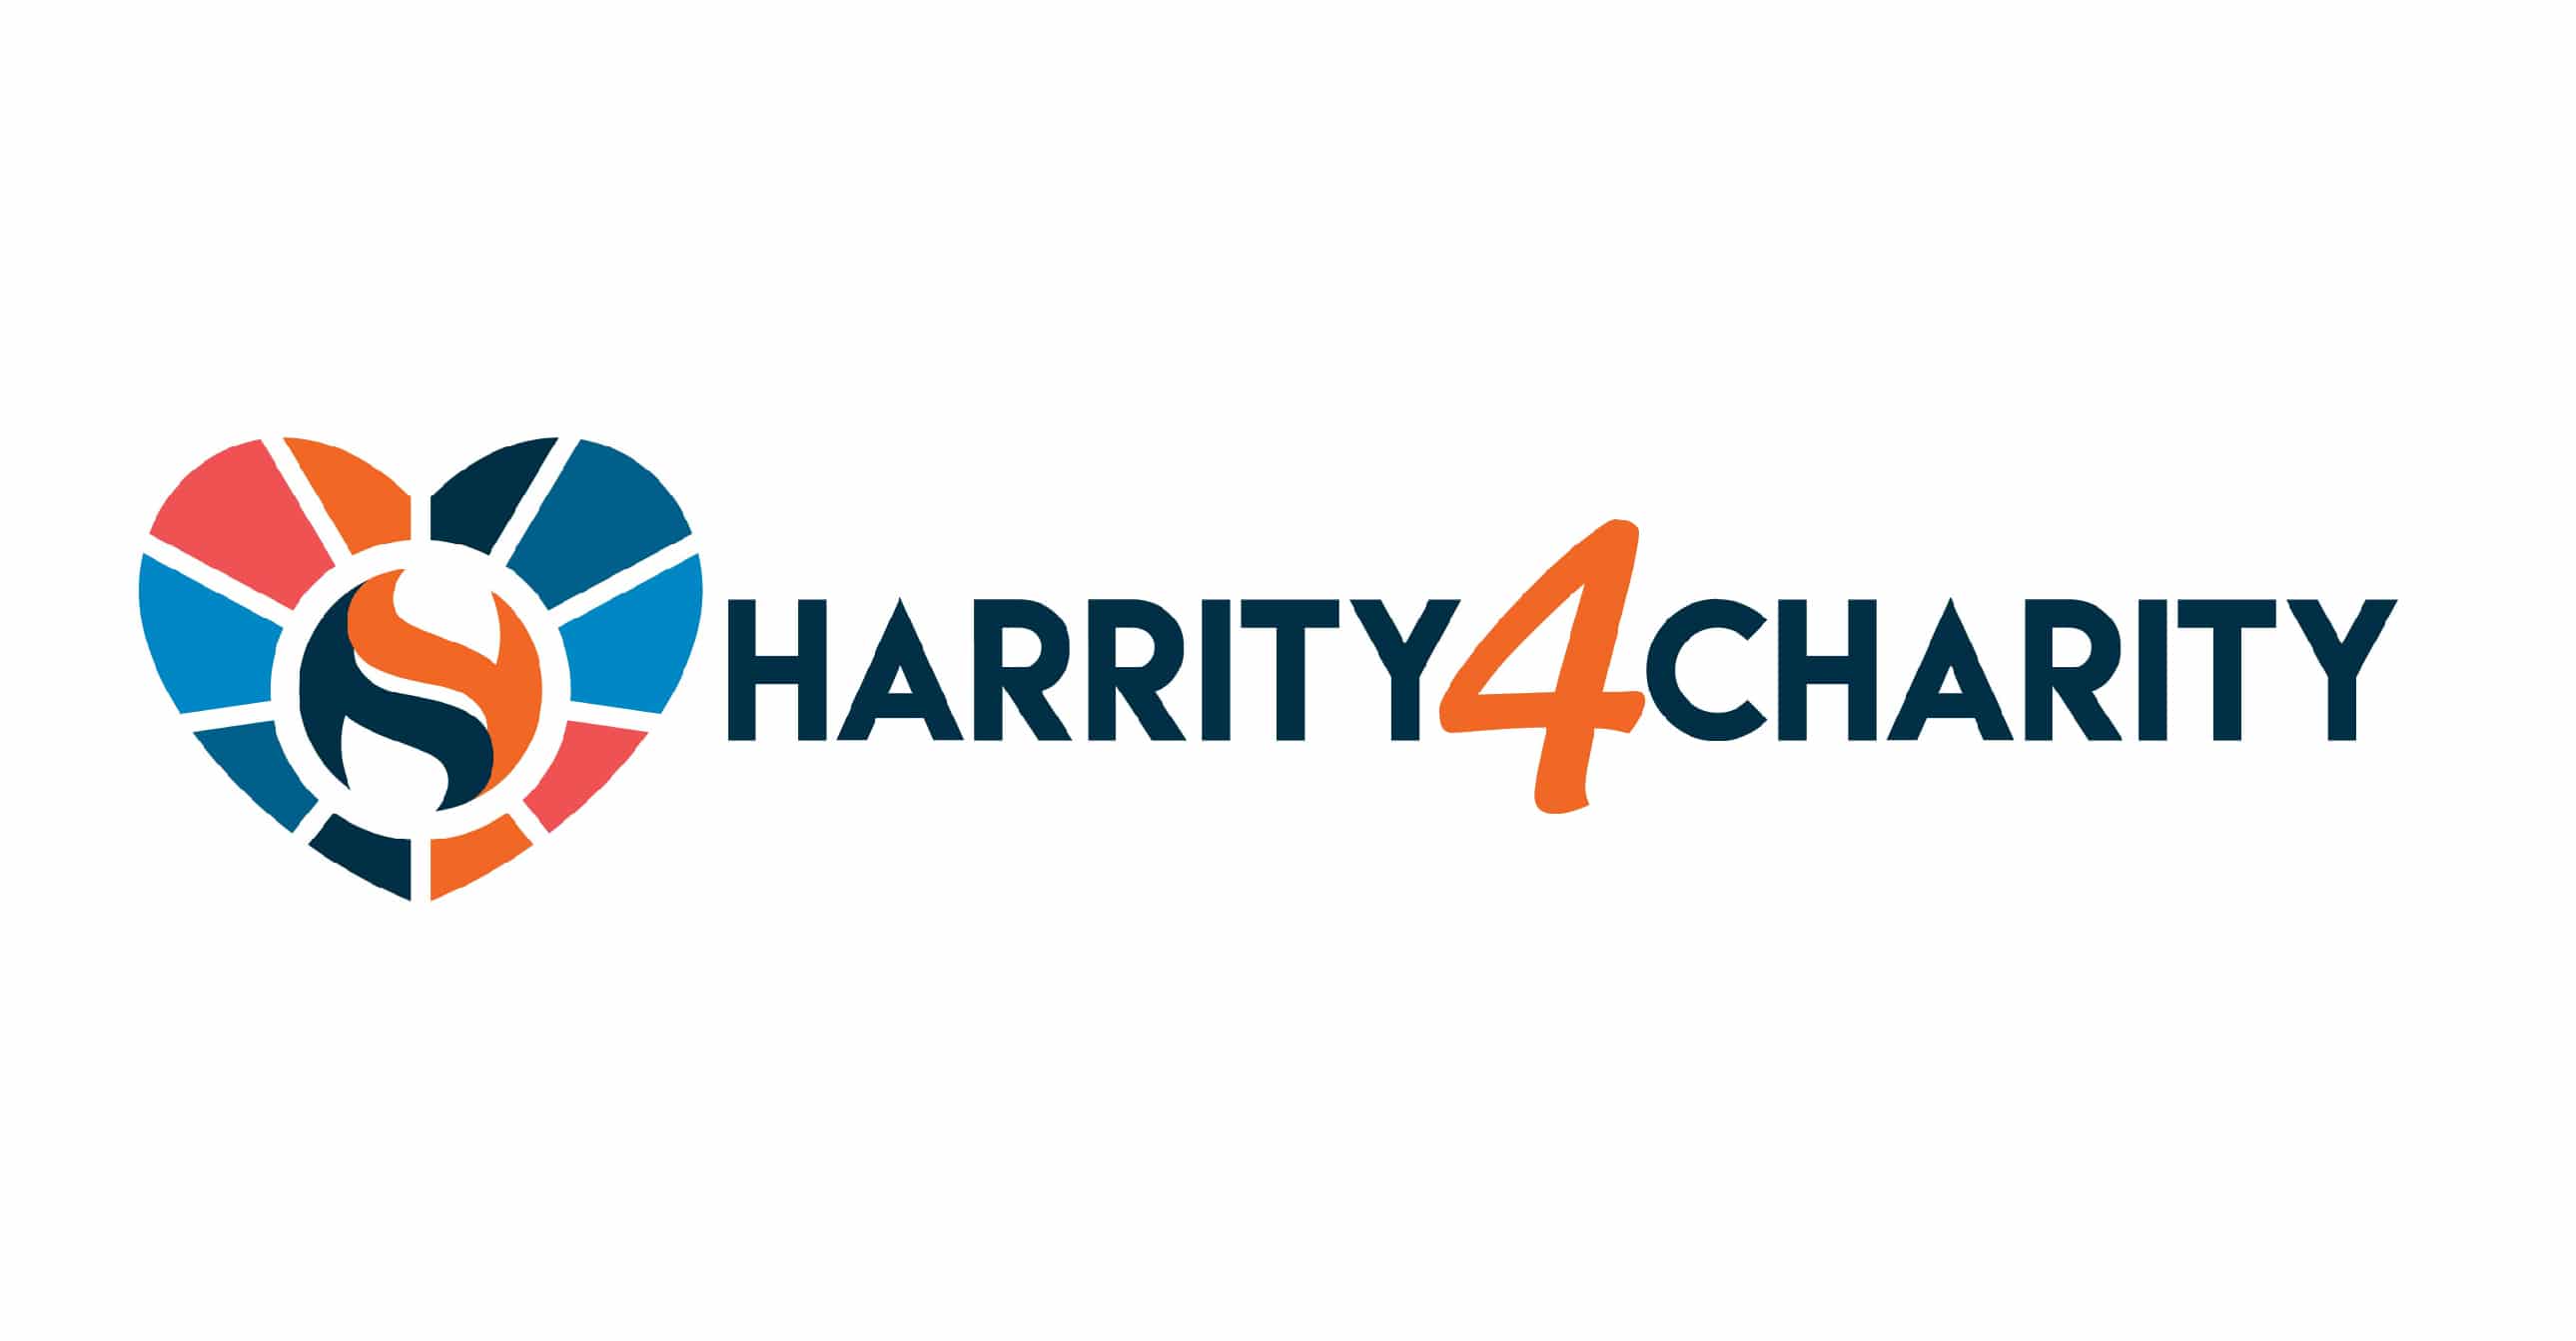 Harrity 4 Charity